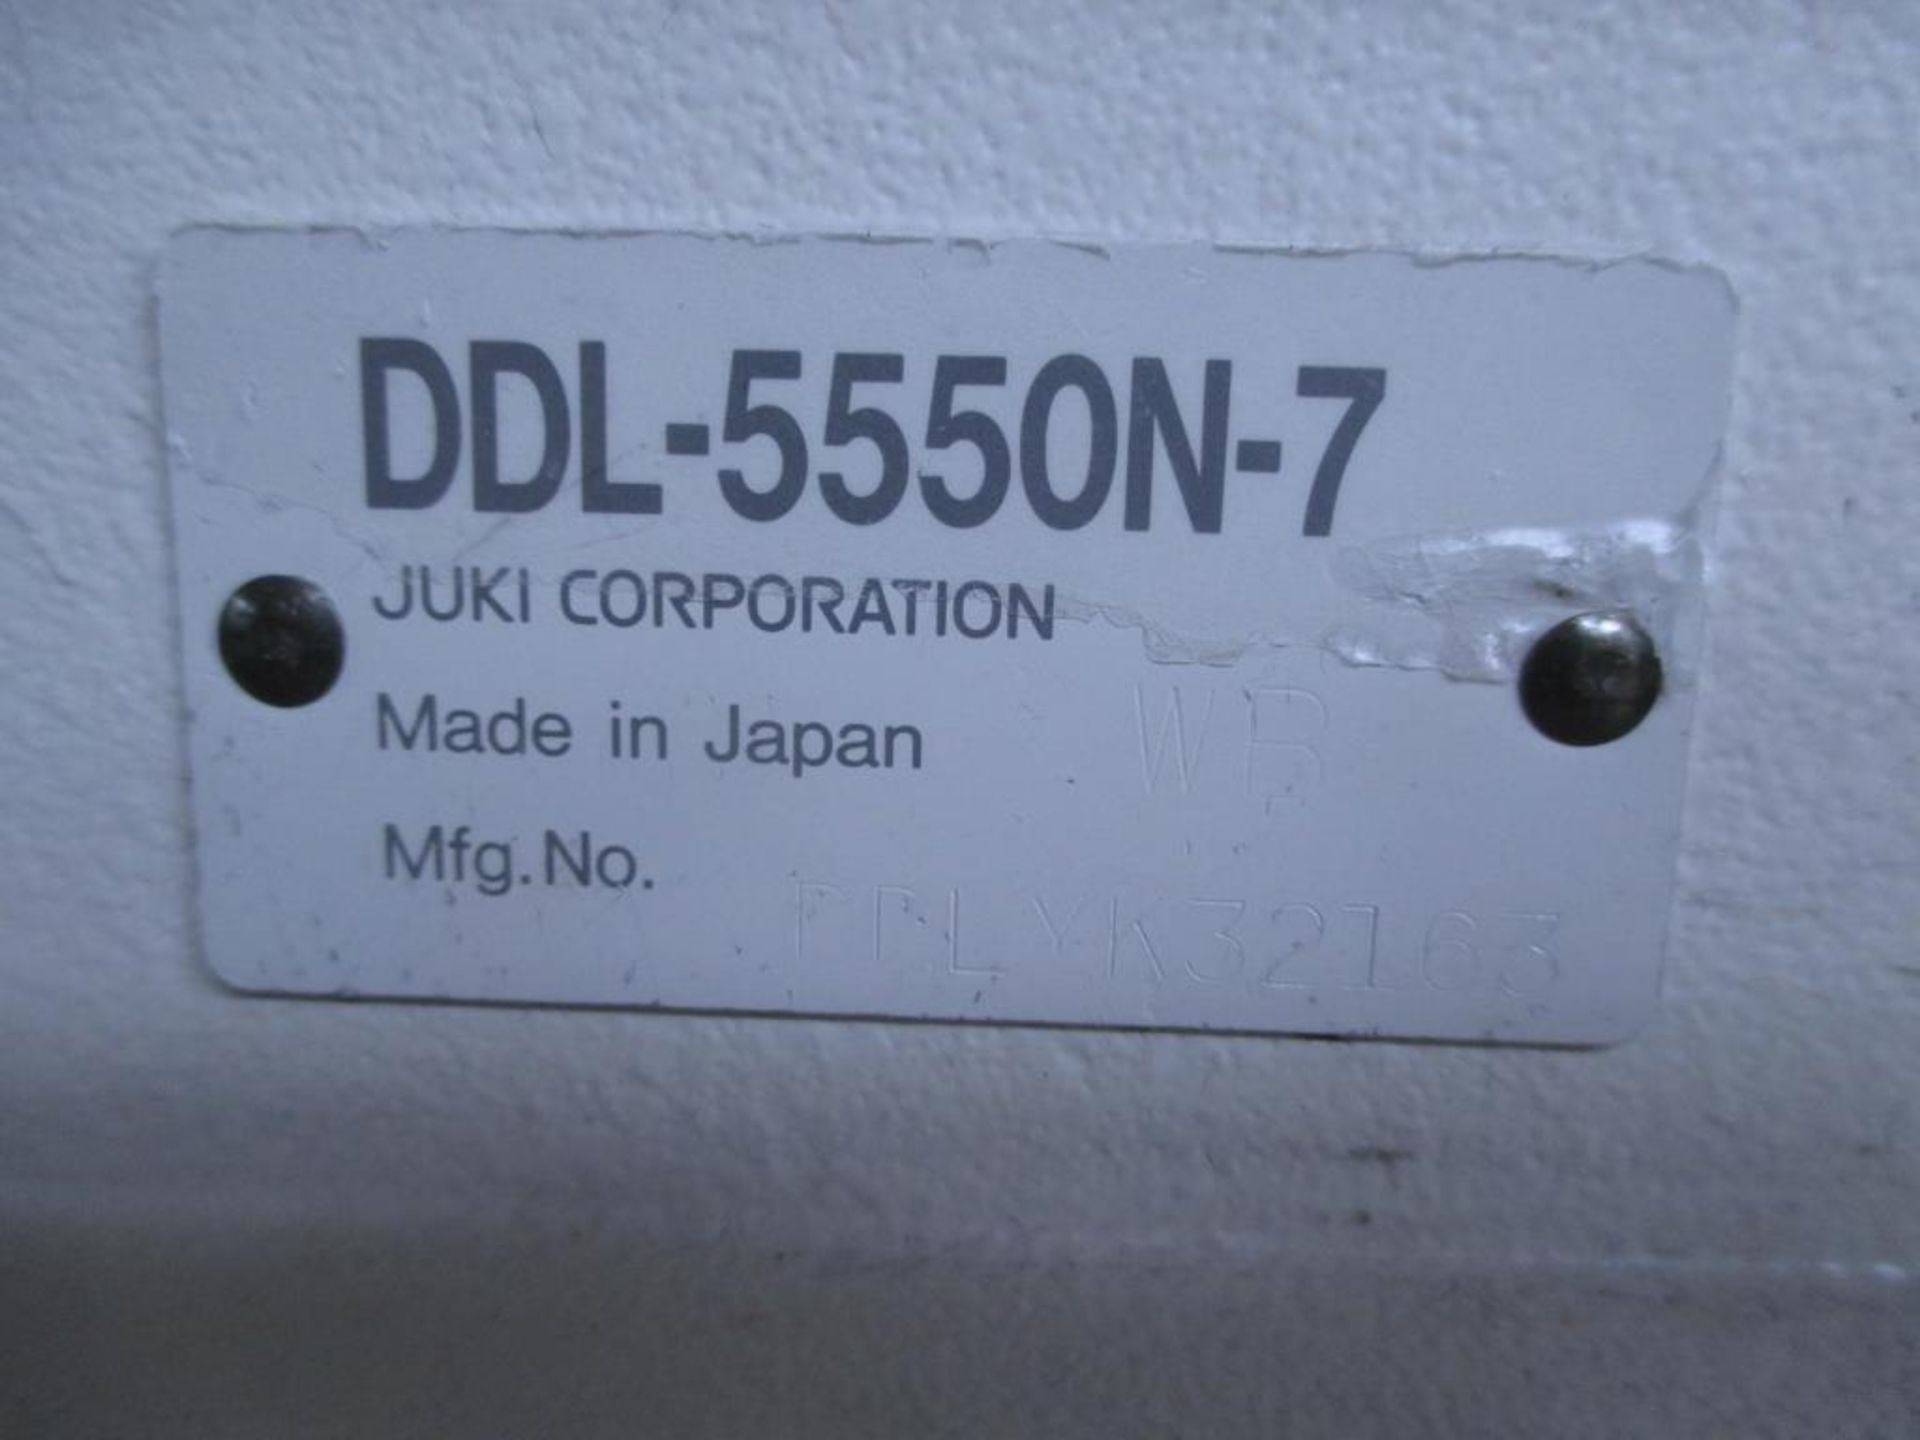 Lockstitch Reverse Industrial Sewing Machine. Juki DDL-5550N-7 1-Needle Lockstitch Reverse - Image 3 of 7